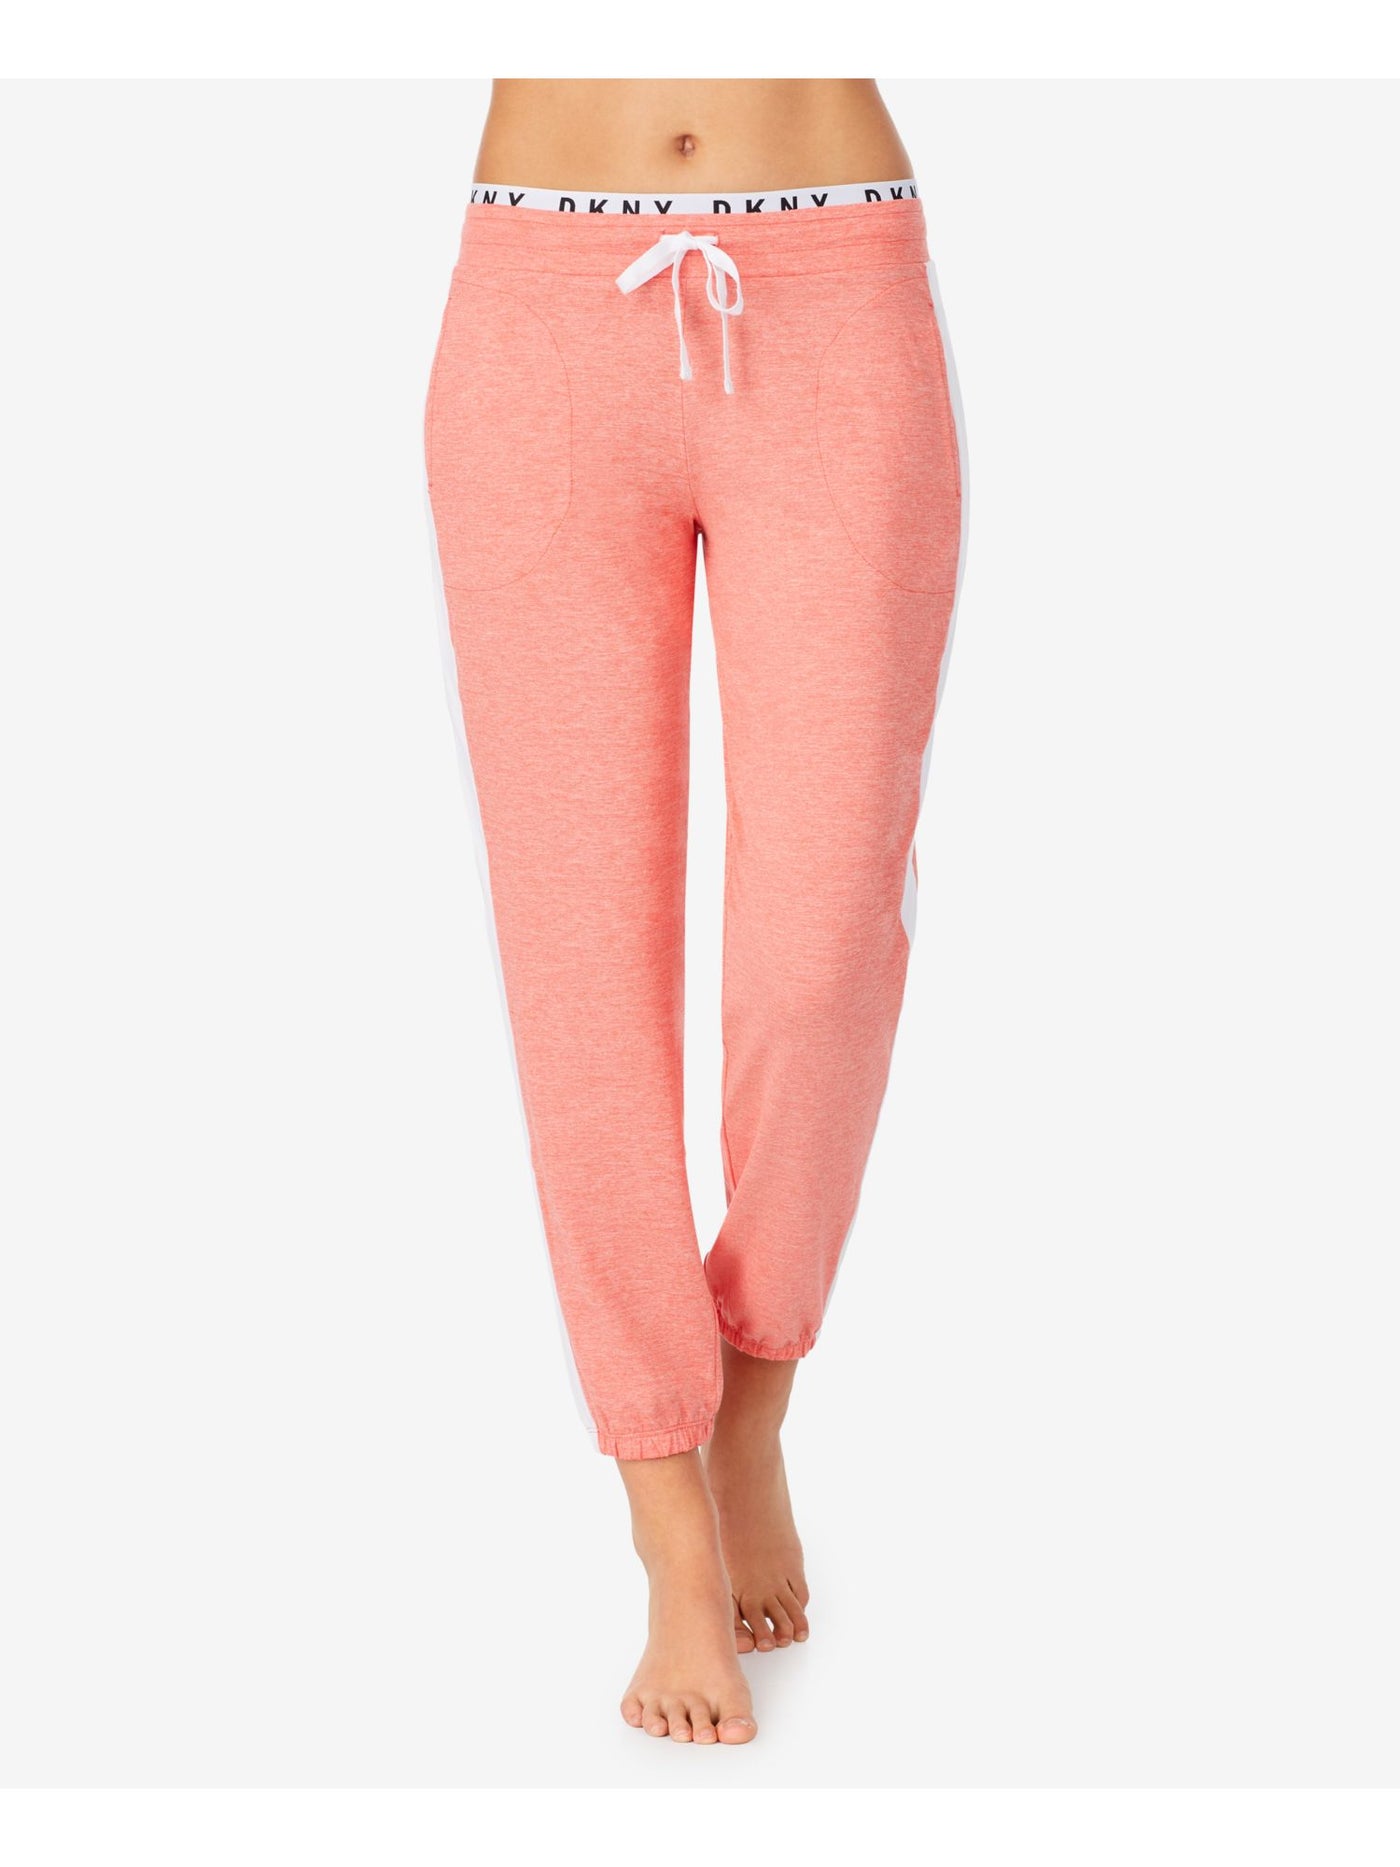 DKNY Intimates Pink Pocketed Cuffed Jogger Sleep Pants XL